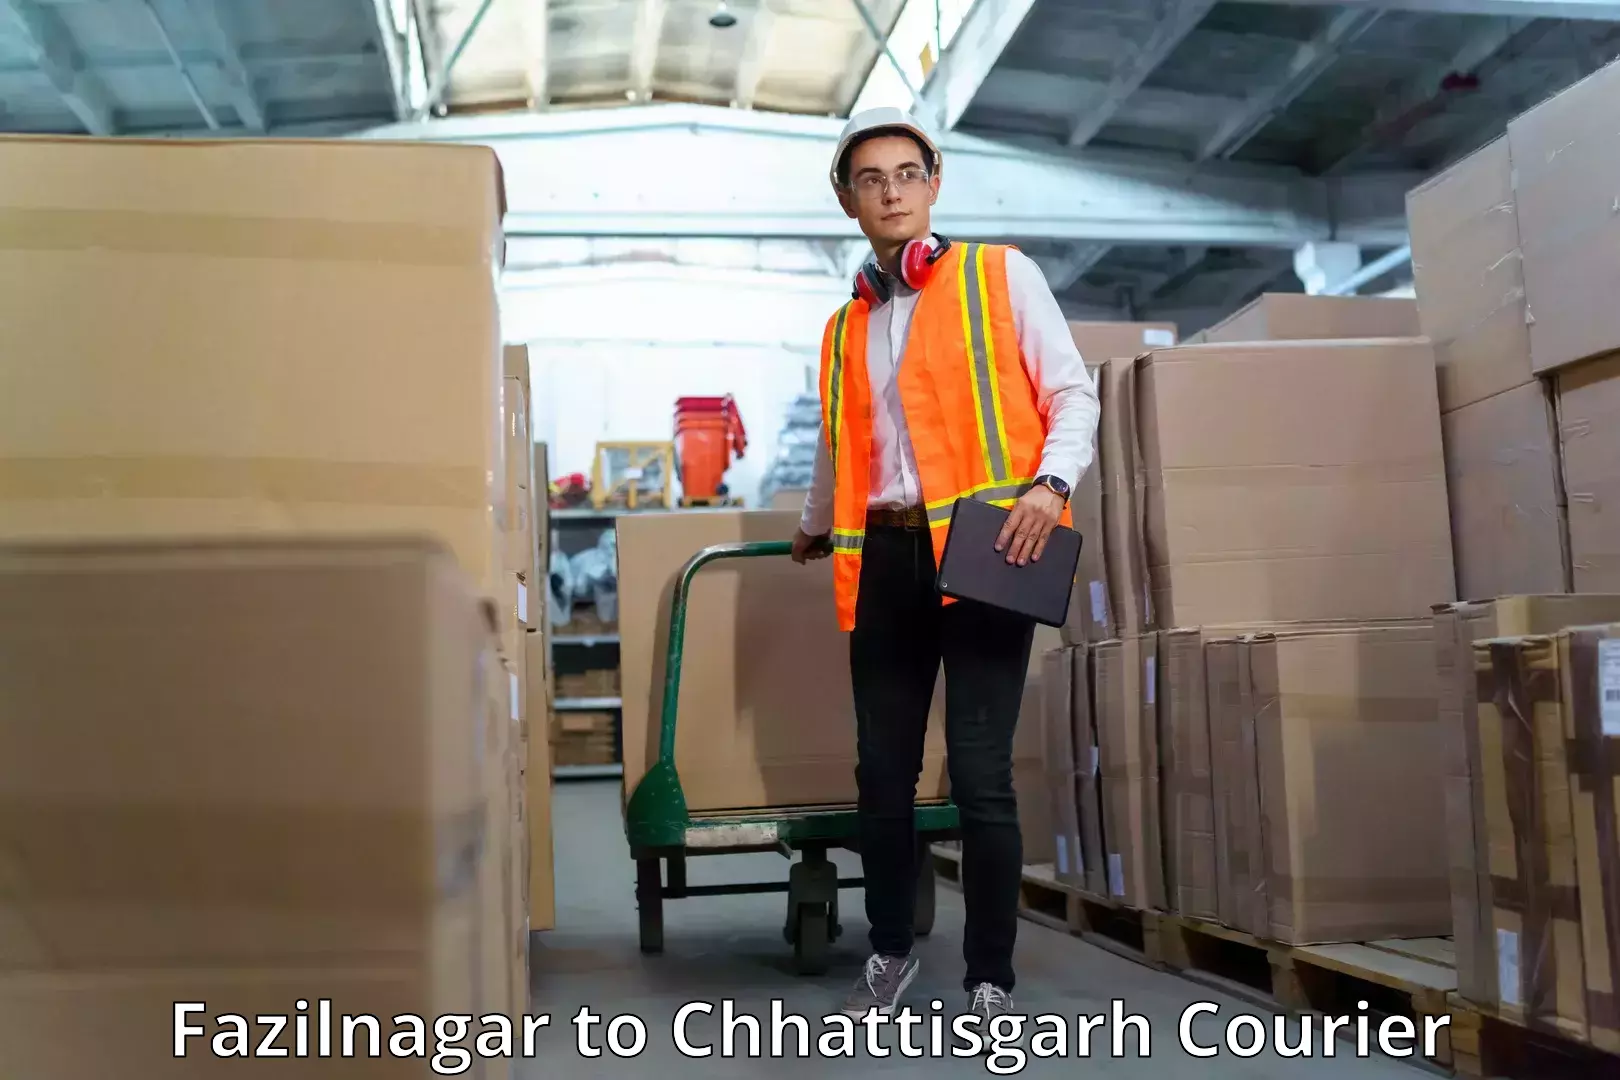 Courier service comparison Fazilnagar to Sarangarh